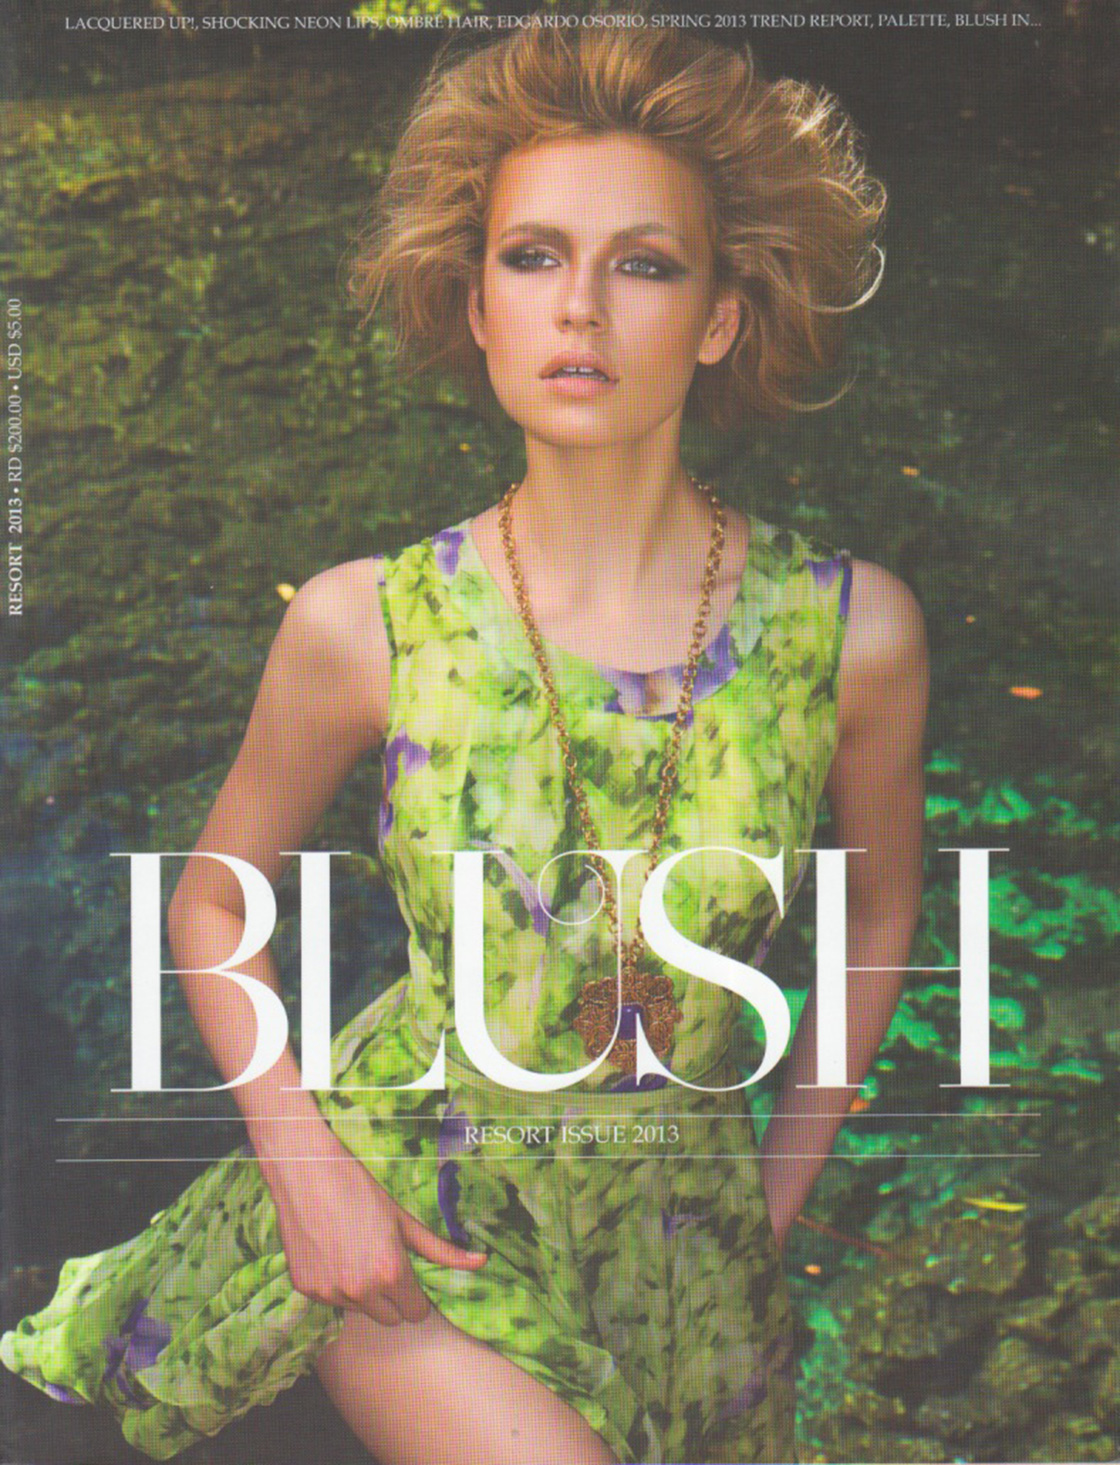 BLUSH RESORT ISSUE 2013